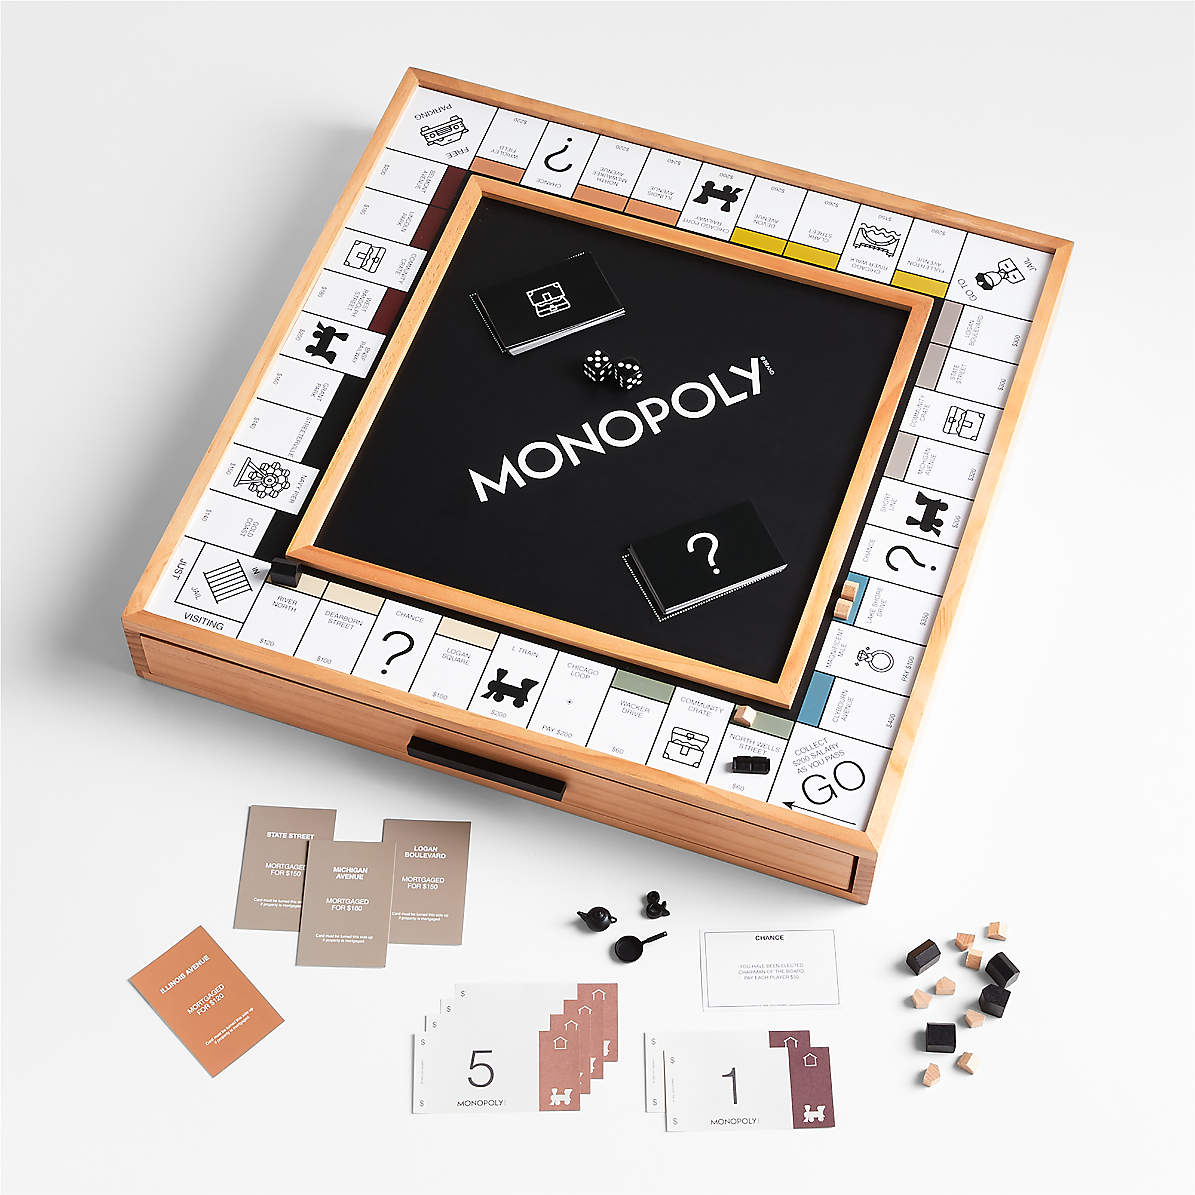 Monopoly Luxury Edition